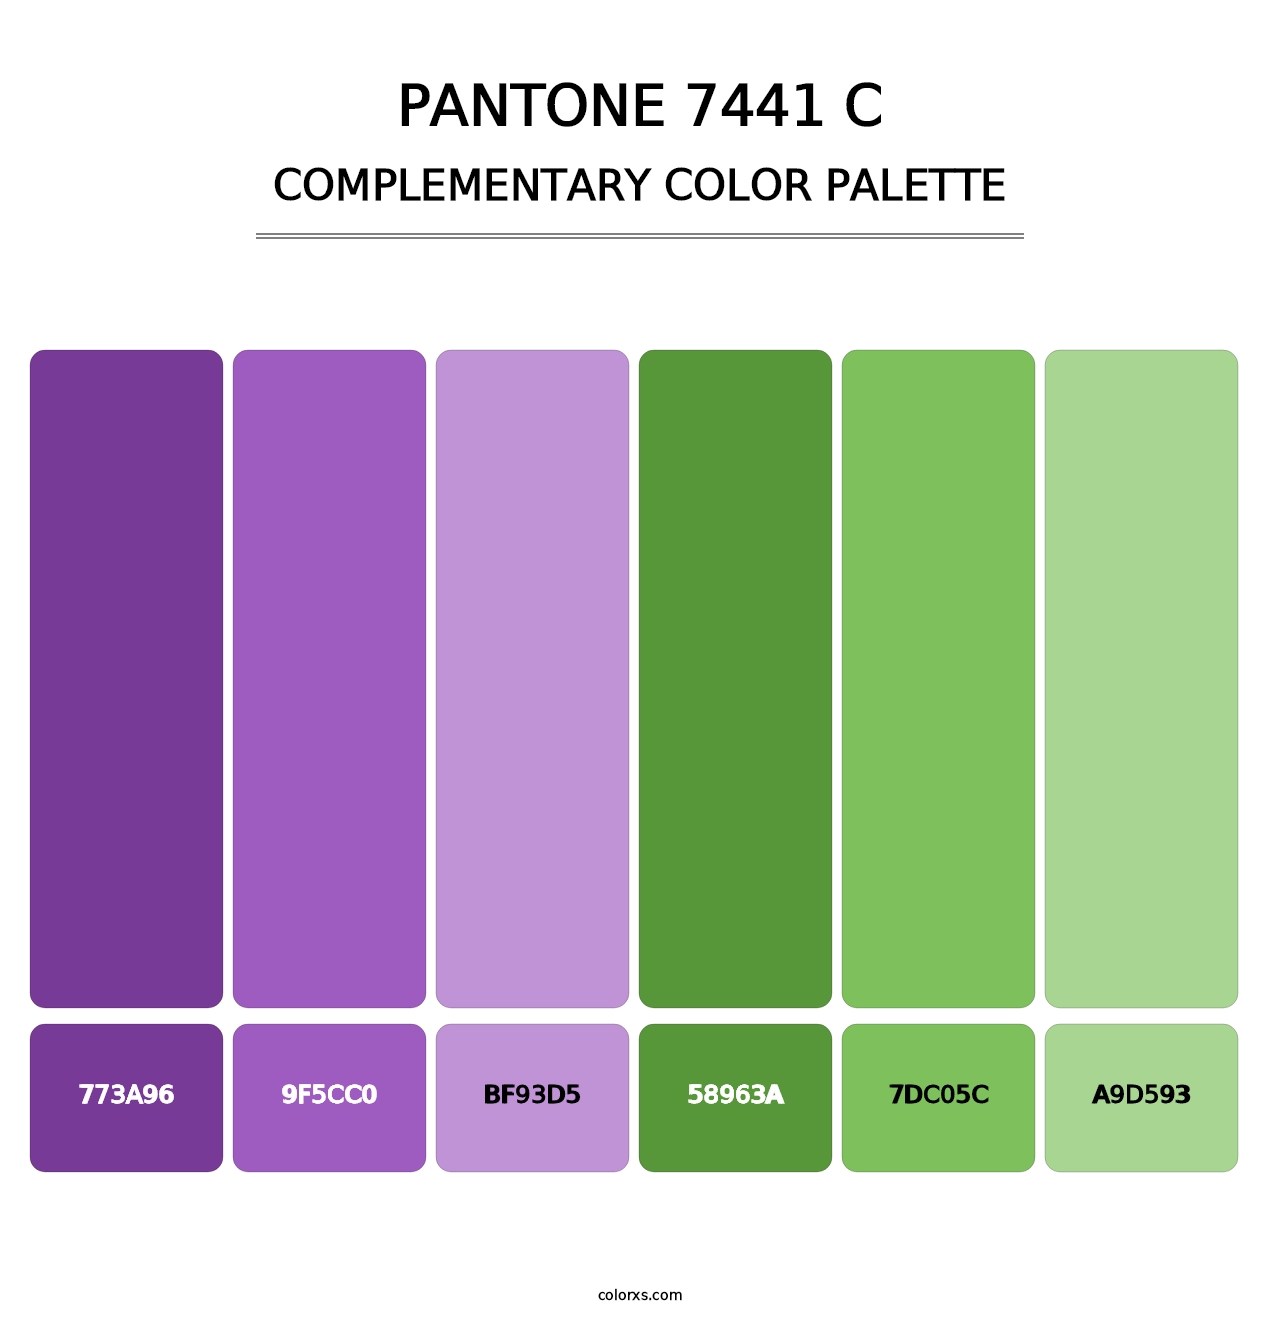 PANTONE 7441 C - Complementary Color Palette